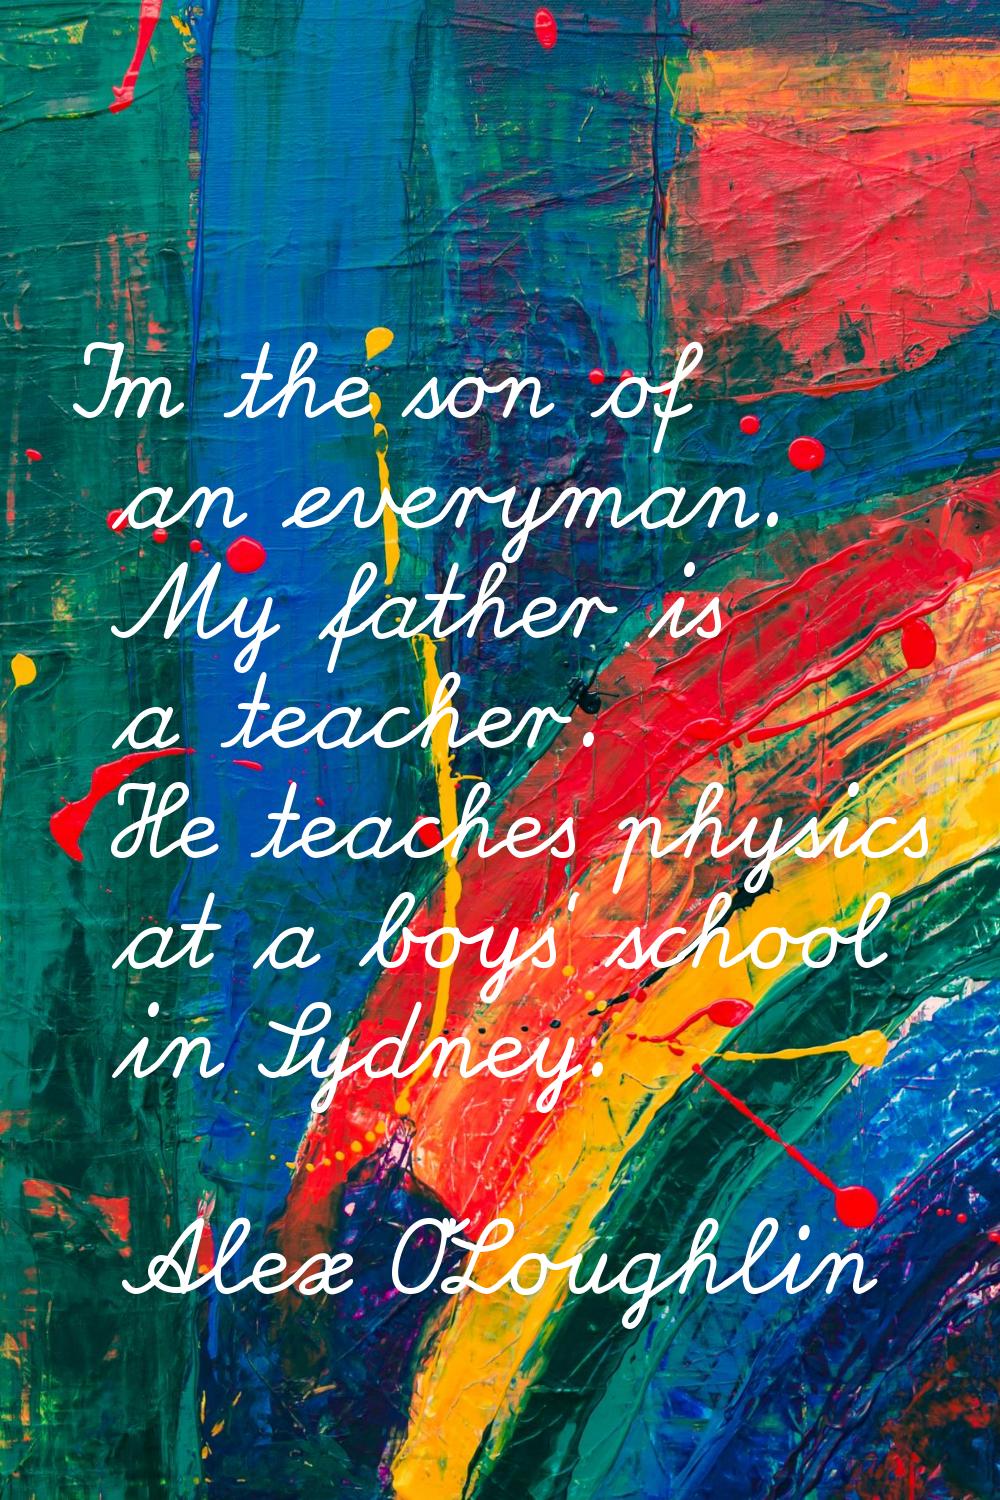 I'm the son of an everyman. My father is a teacher. He teaches physics at a boys' school in Sydney.